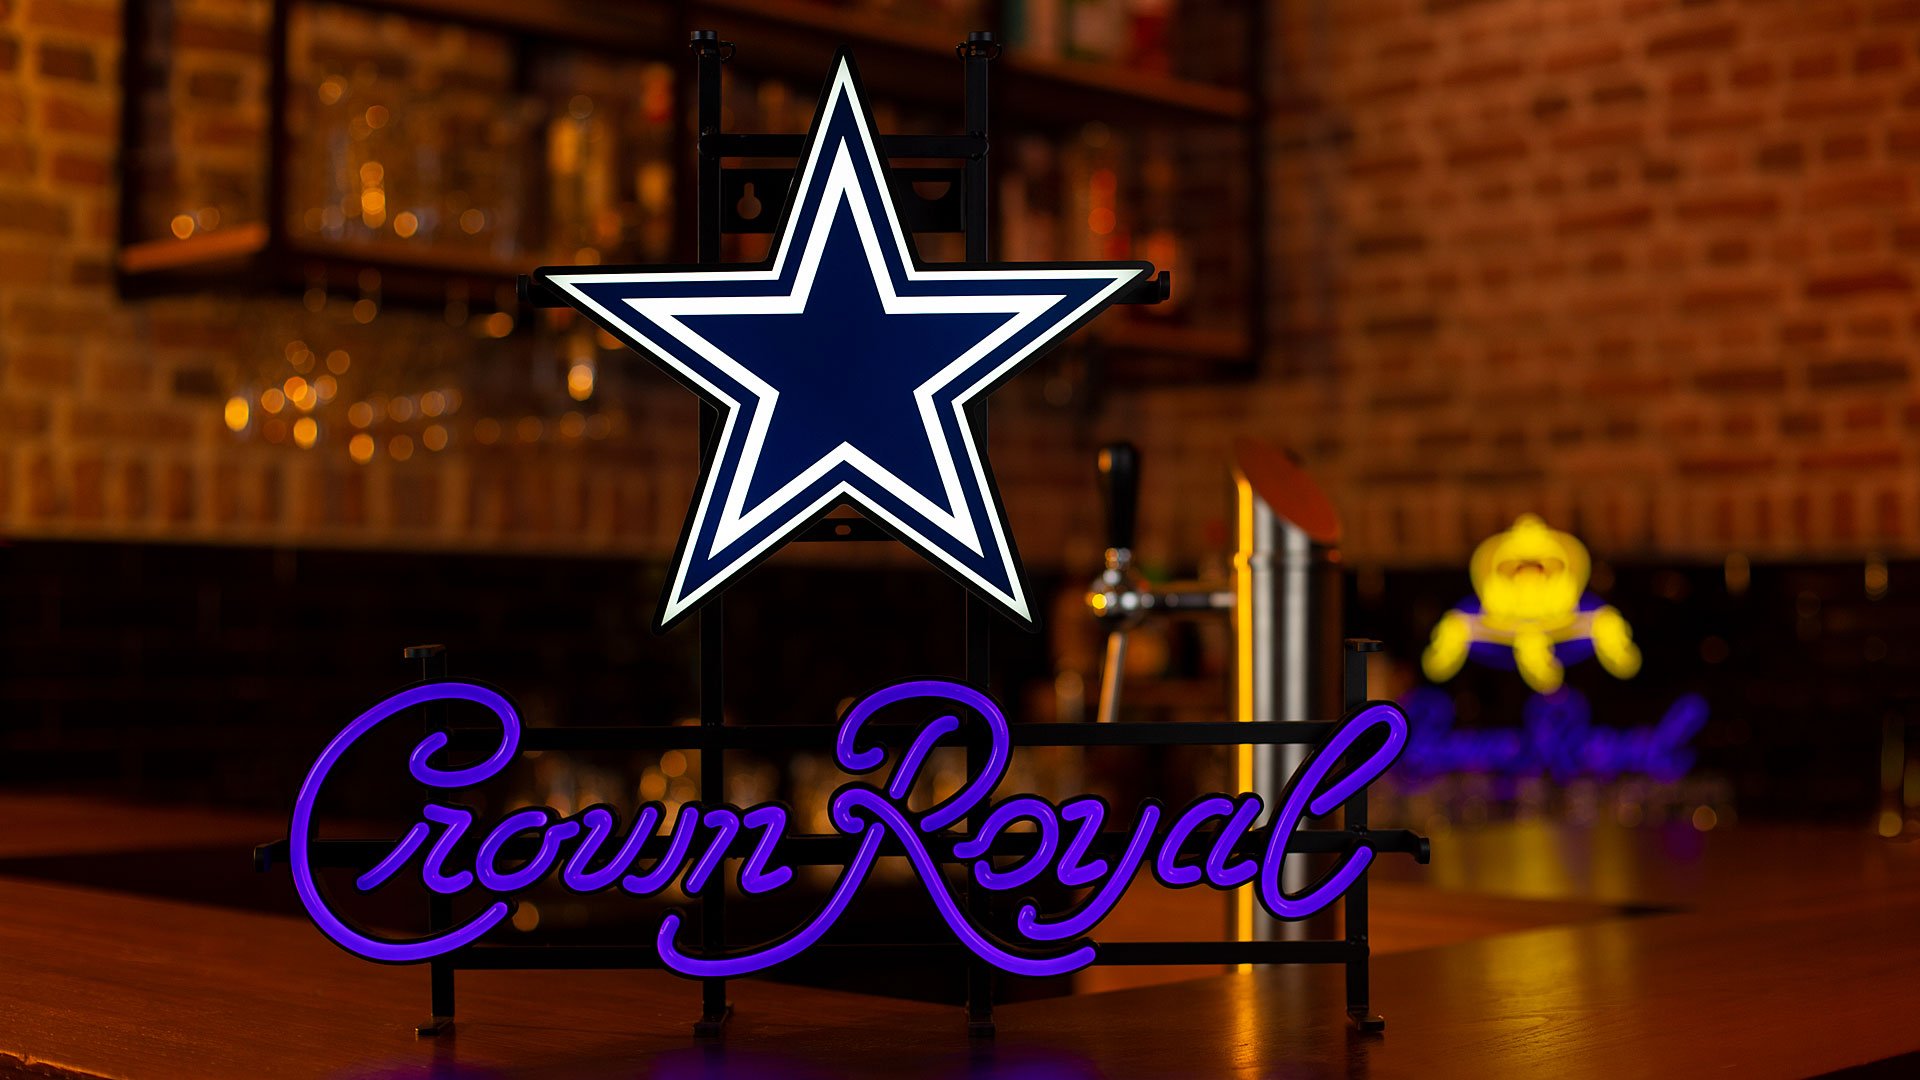 Crown-Royal-Cowboys, 2019-020 - 1920x1080 px - Lage resolutie (1)